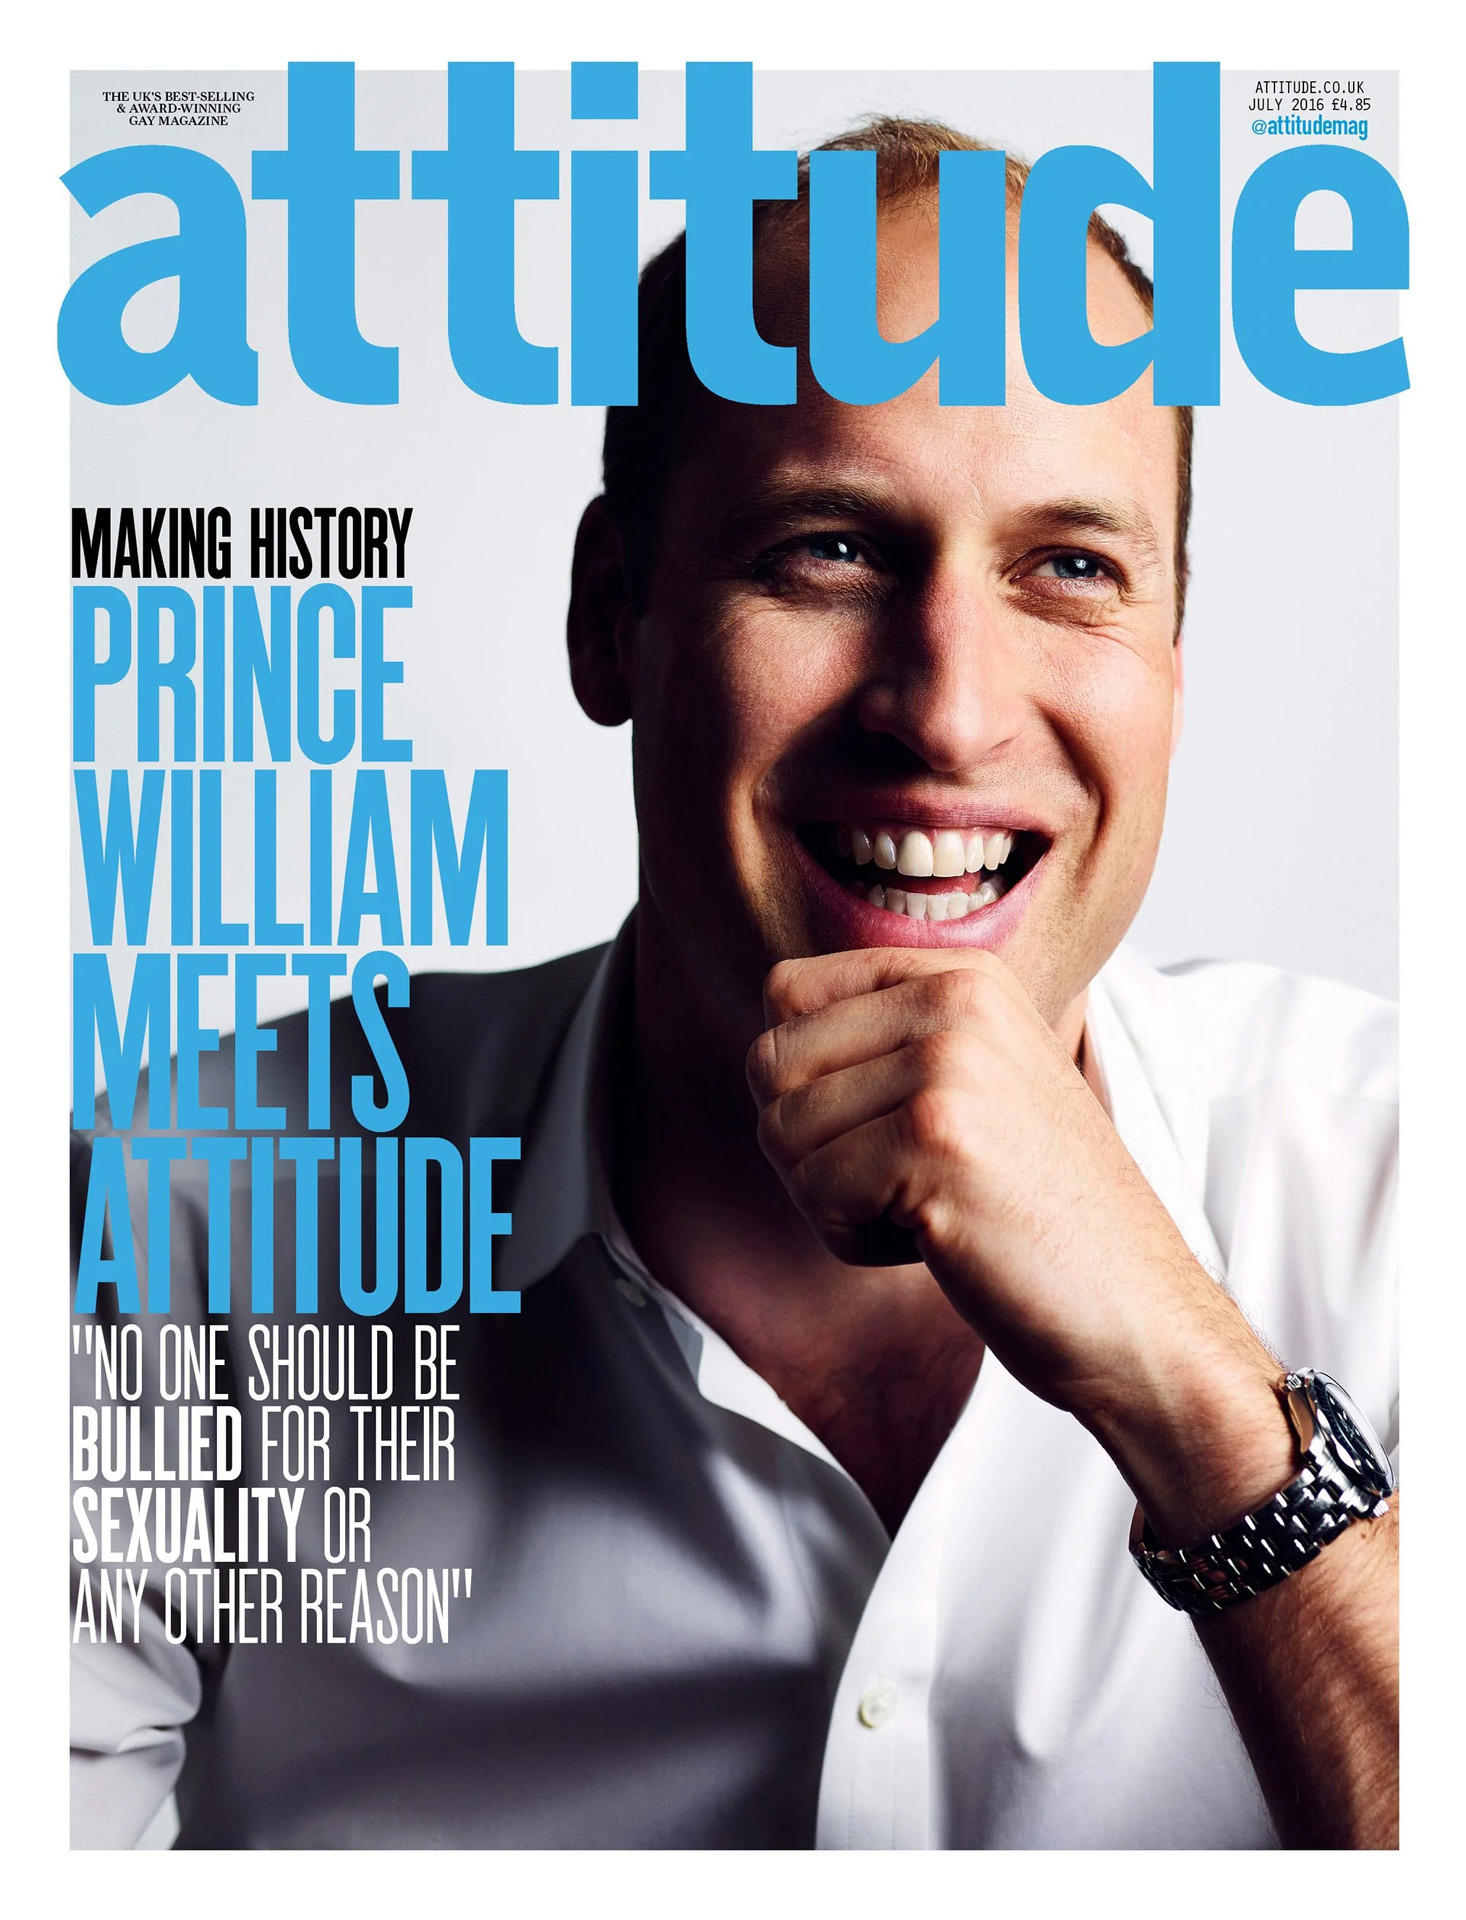 Vilmos herceg az attitude magazin címlapján